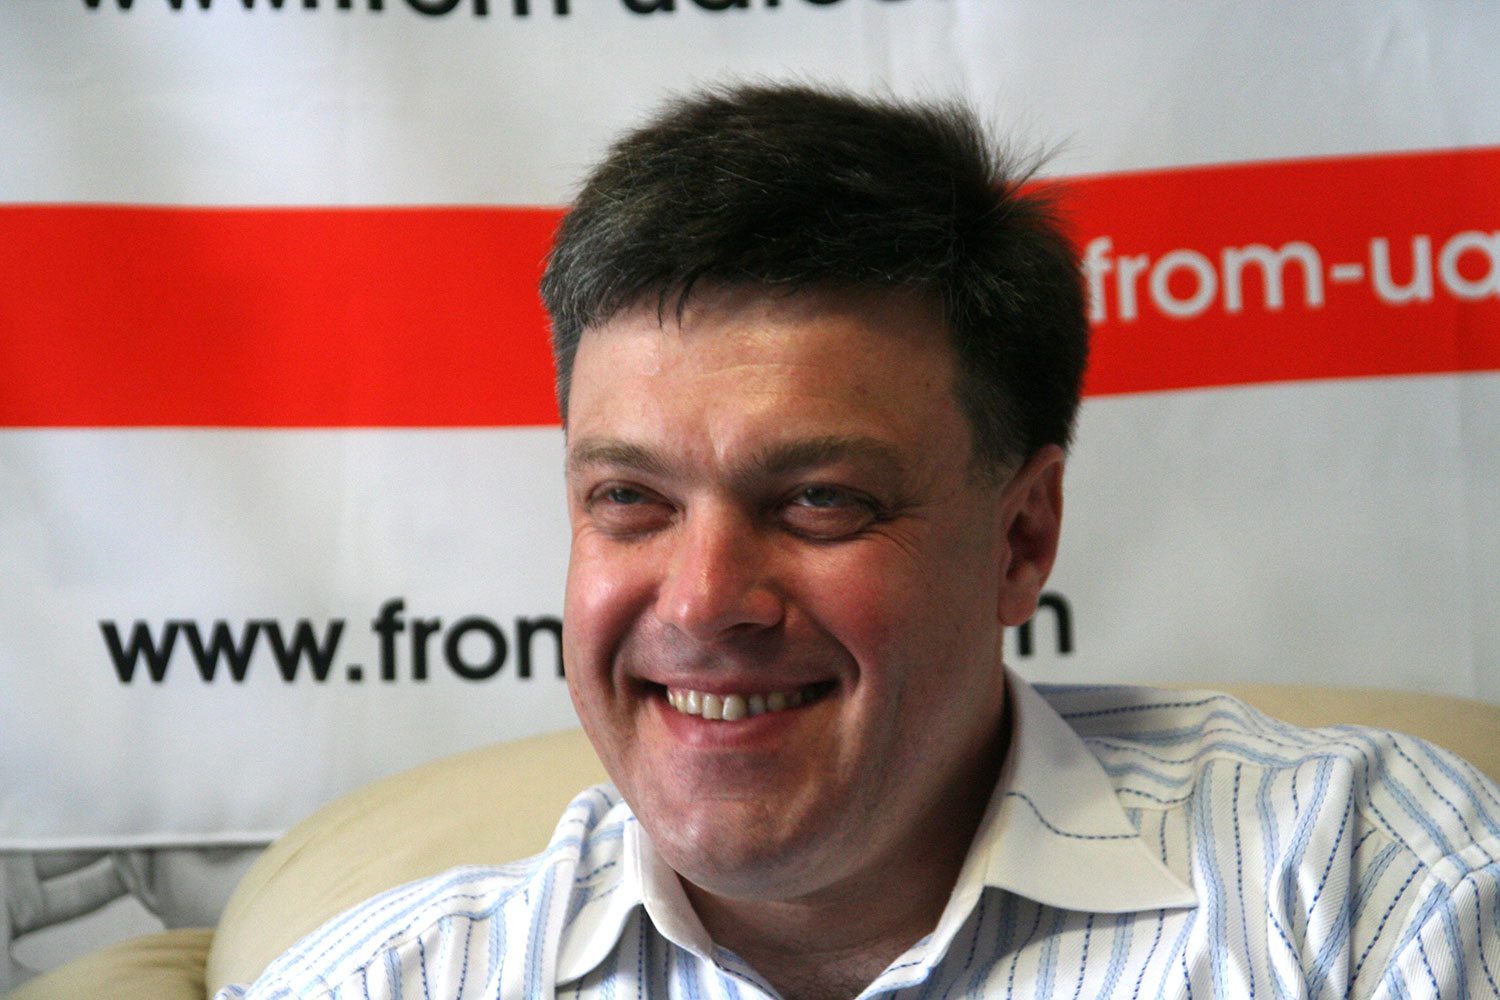 Олег Тягнибок - председатель партии ВО «Свобода» в гостях у From-UA